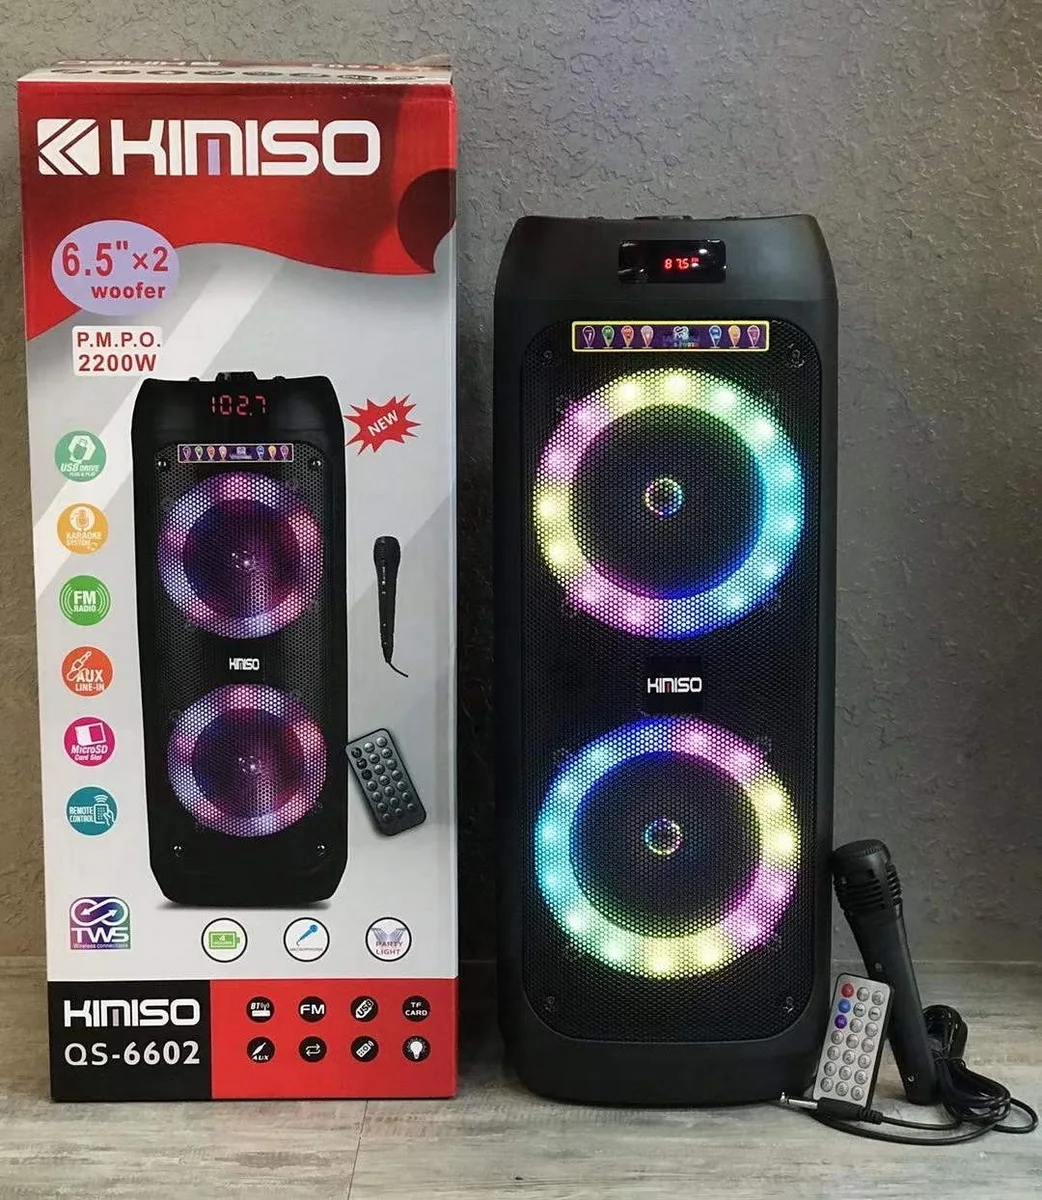 

QS-6602 Best Selling BT Speaker KIMISO Double 6.5 Inch Horn Speaker Big Bass Speaker With Microphone